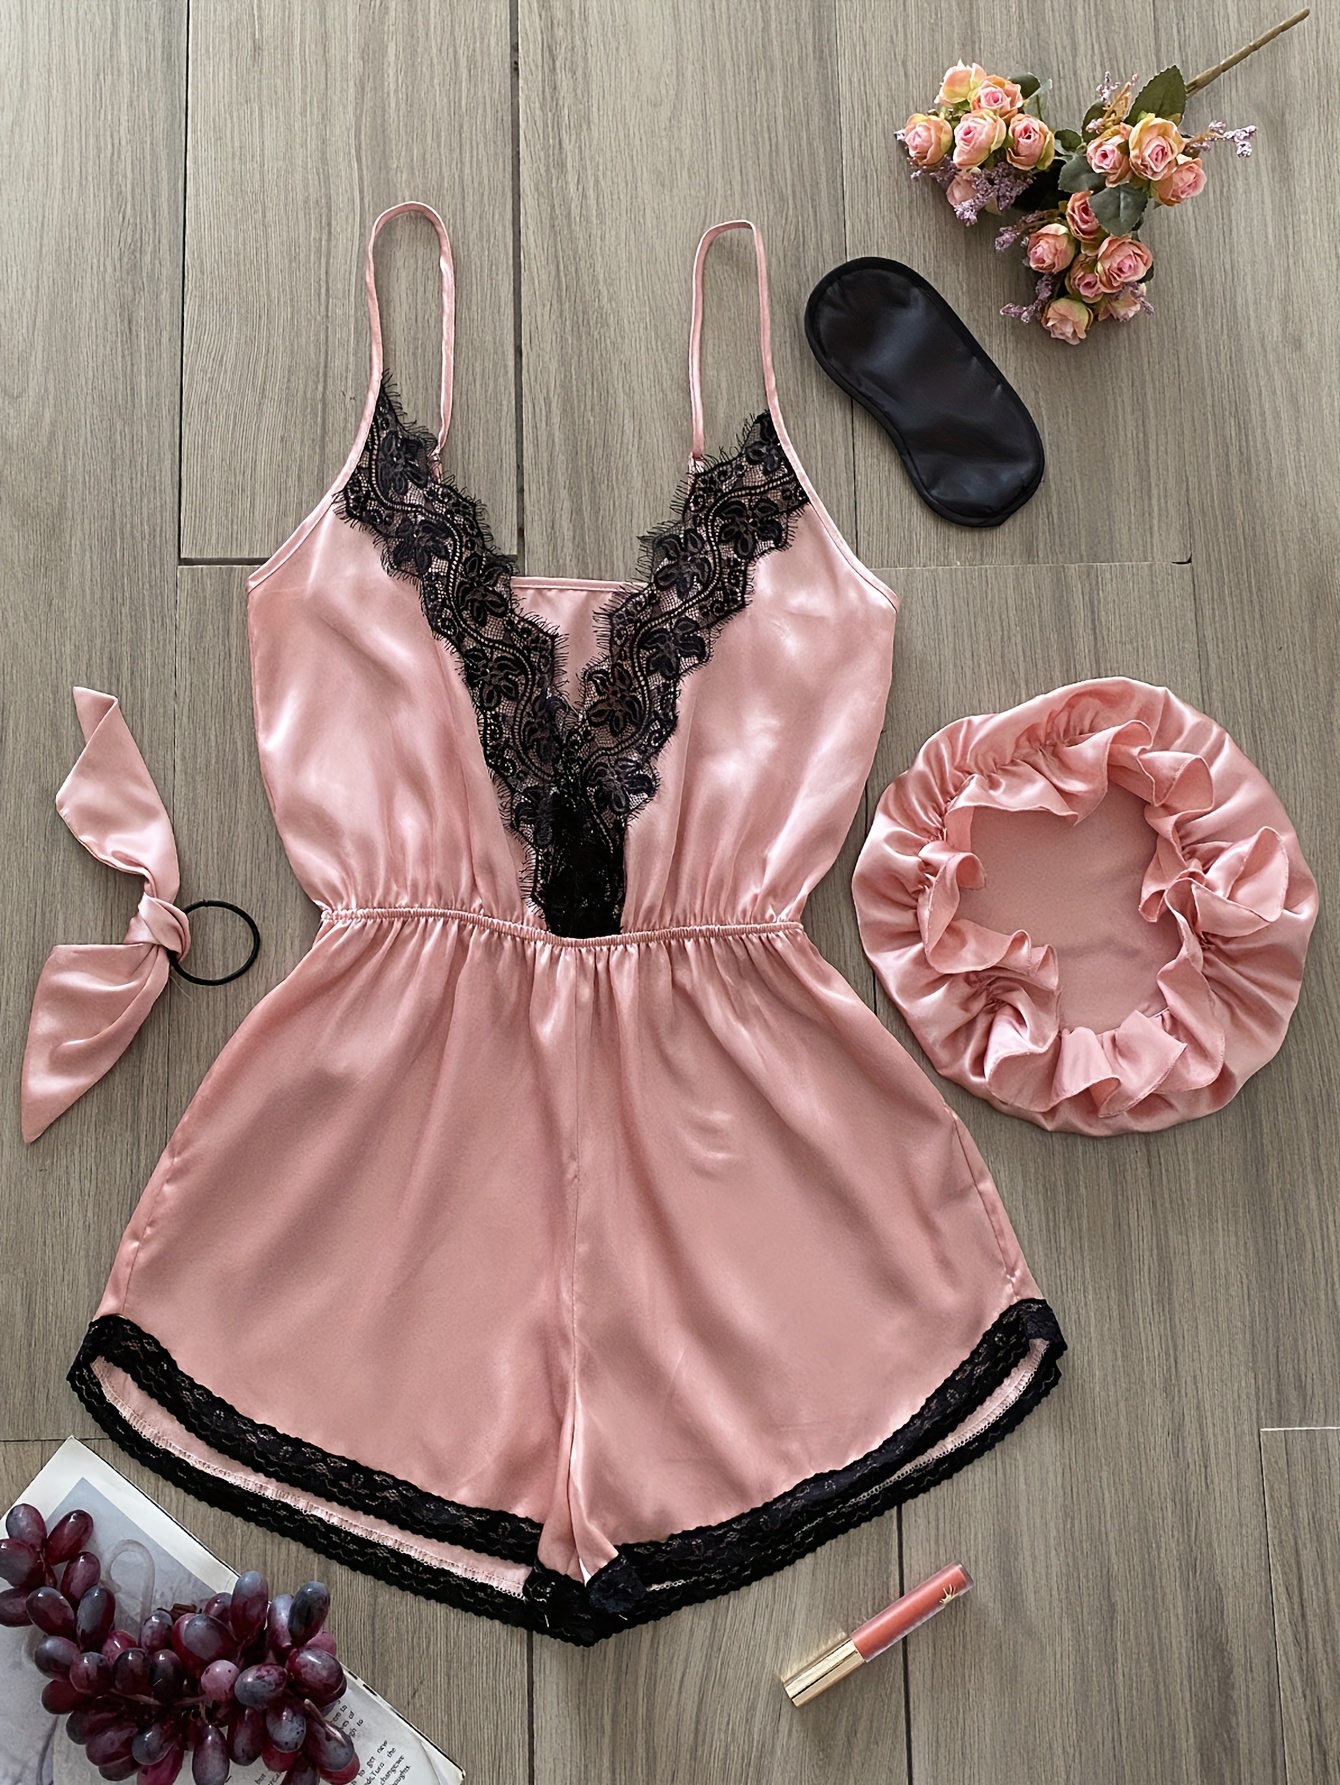 Hot Pink Lacy Satin Lingerie Loungewear Camisole Bodysuit Nightie